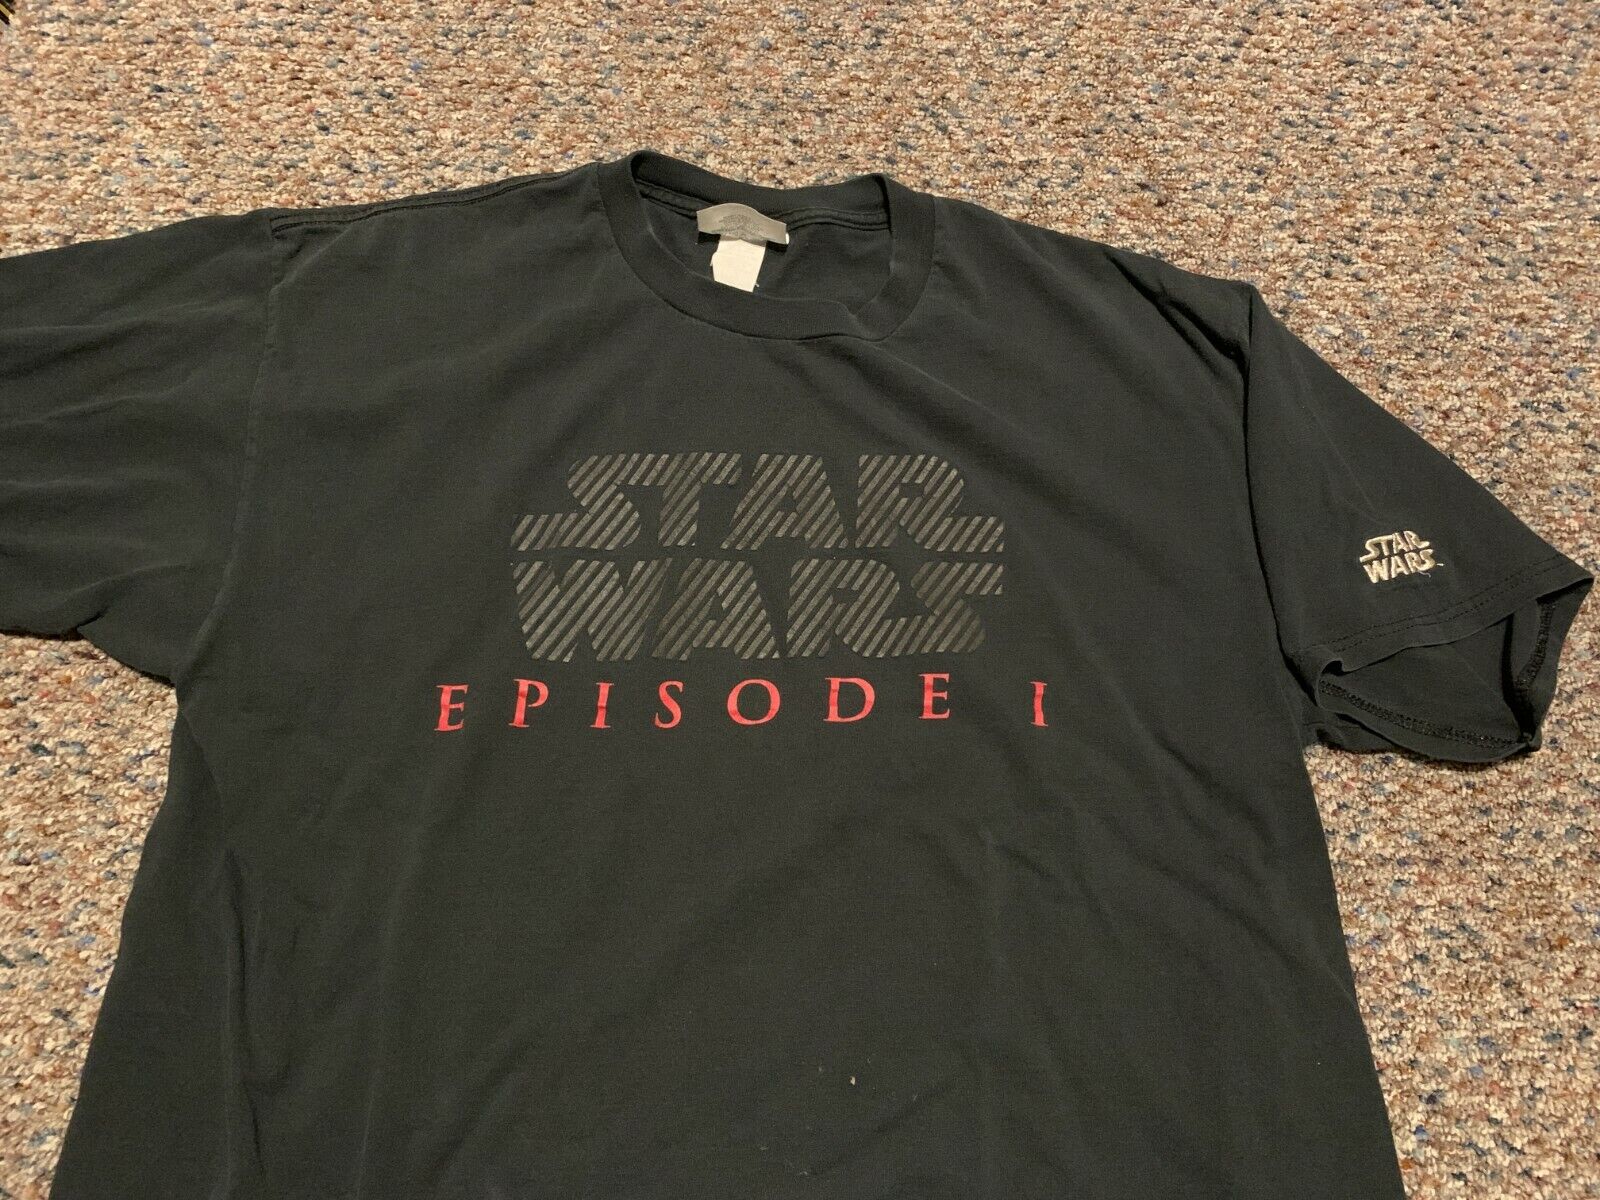 Vintage 90s STAR WARS rare official pre-production EPISODE 1 promo shirt XL1995